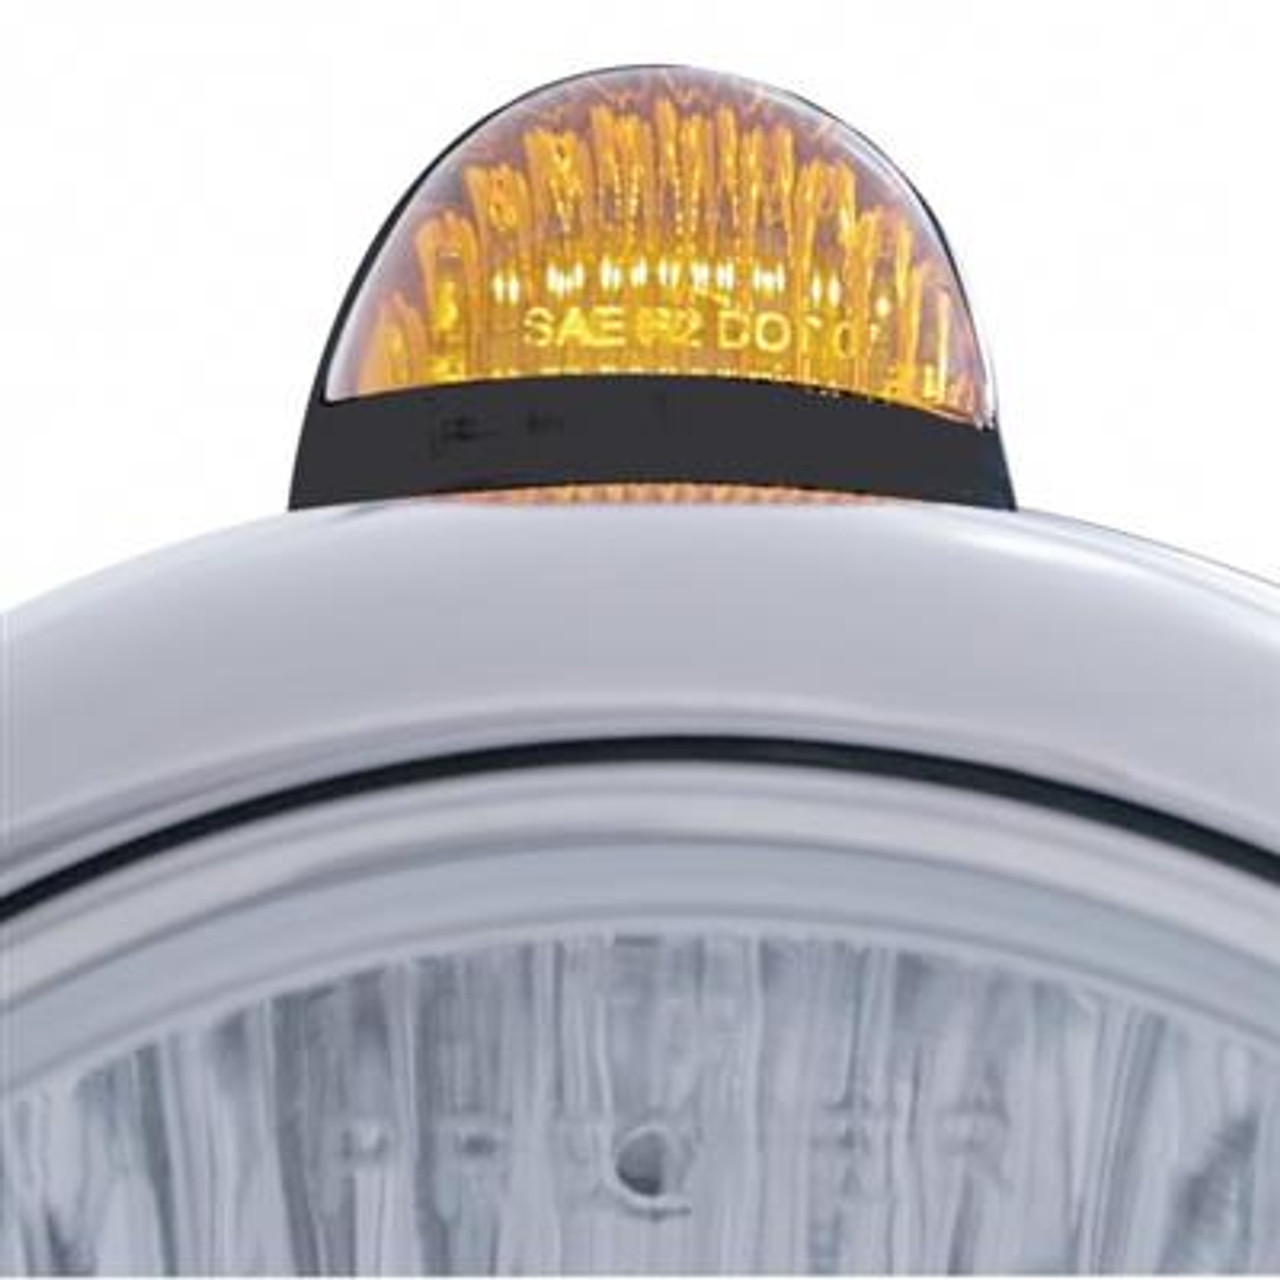 Black Guide 682-C Headlight 6014 & Dual Mode LED Signal - Amber Lens